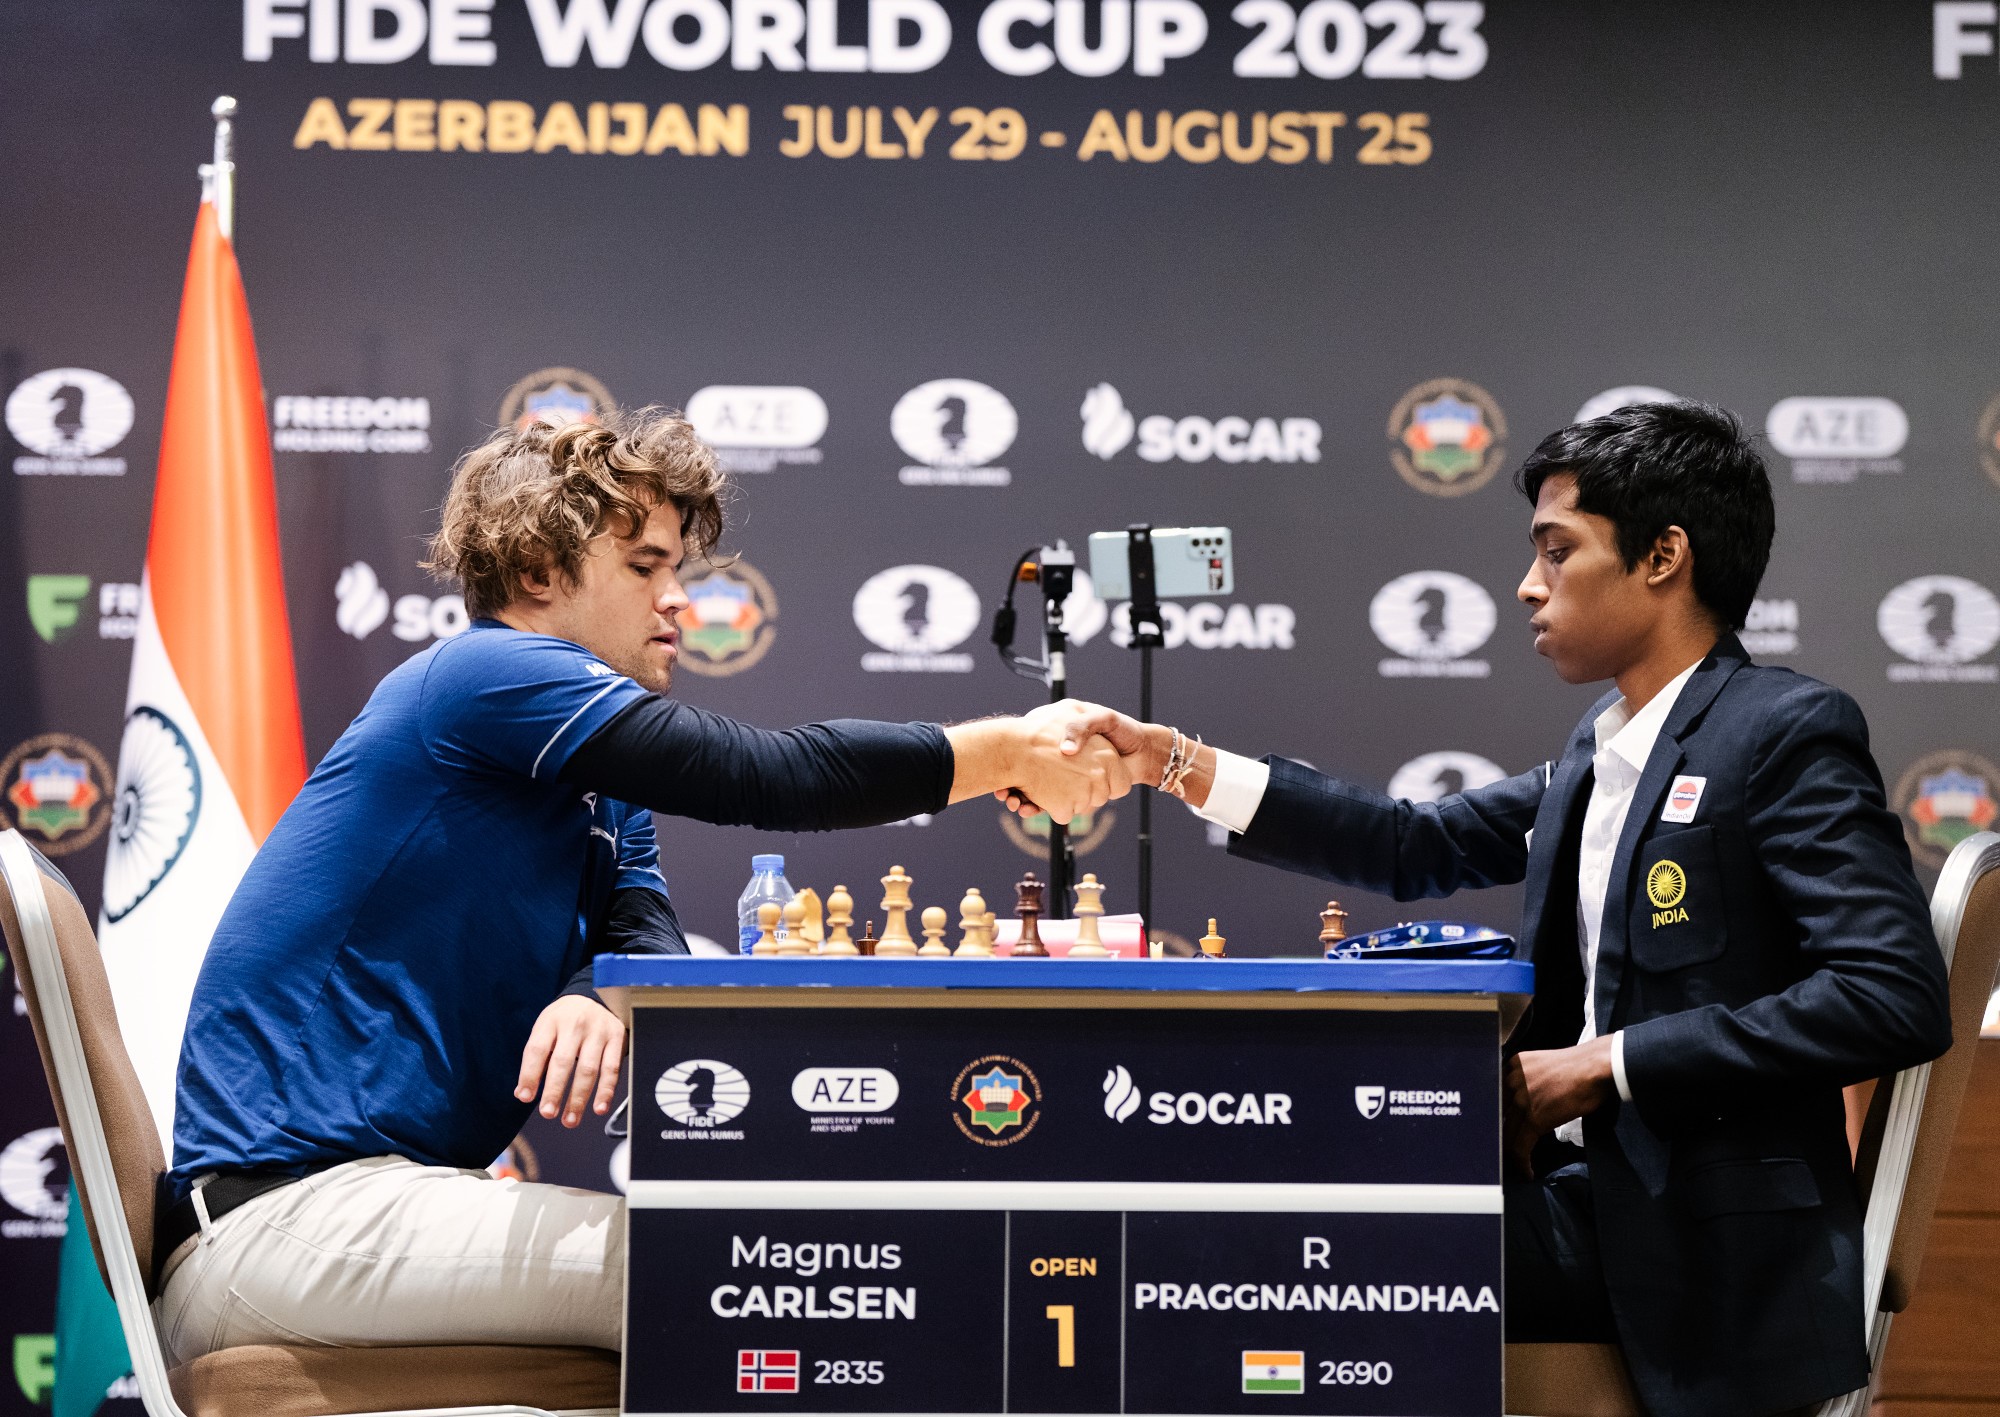 Última rodada do mundial de Xadrez 2023! - R14 (análise) 